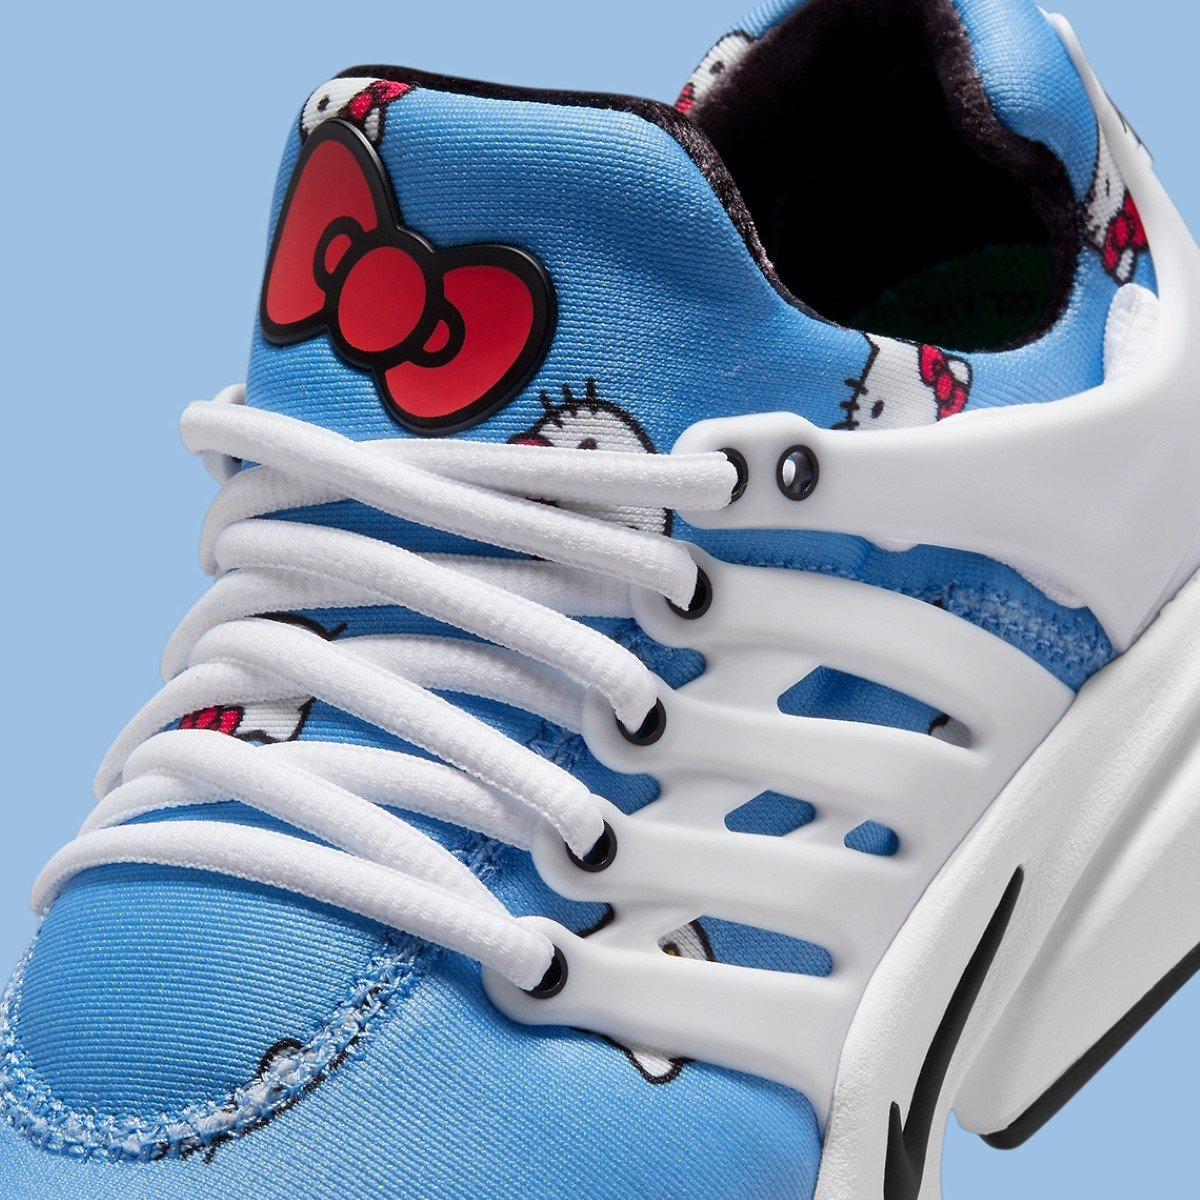 Nike Air Presto x Hello Kitty Collection